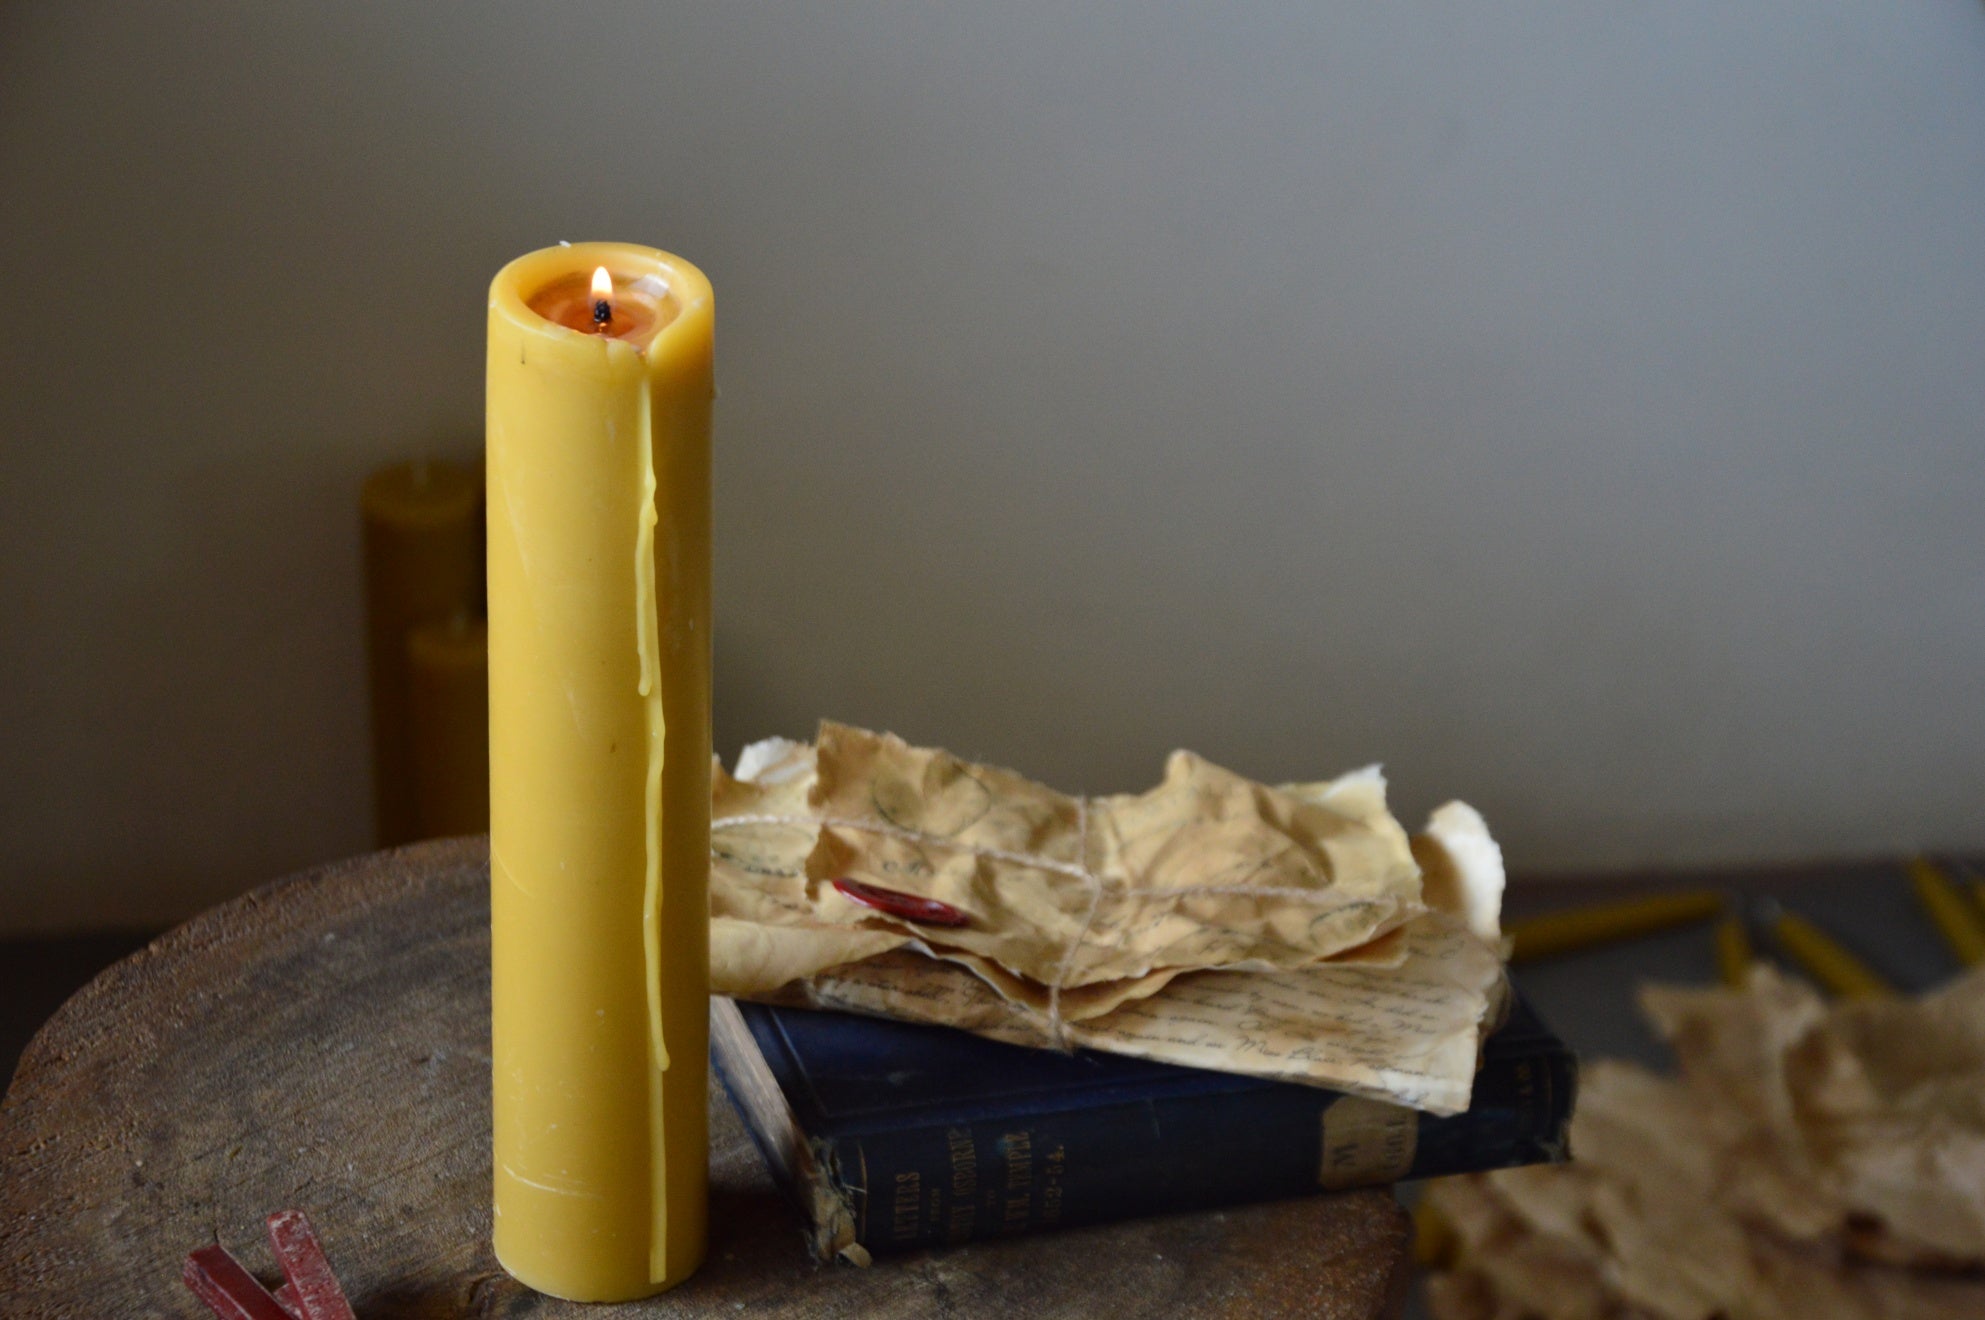 Beeswax pillar candles